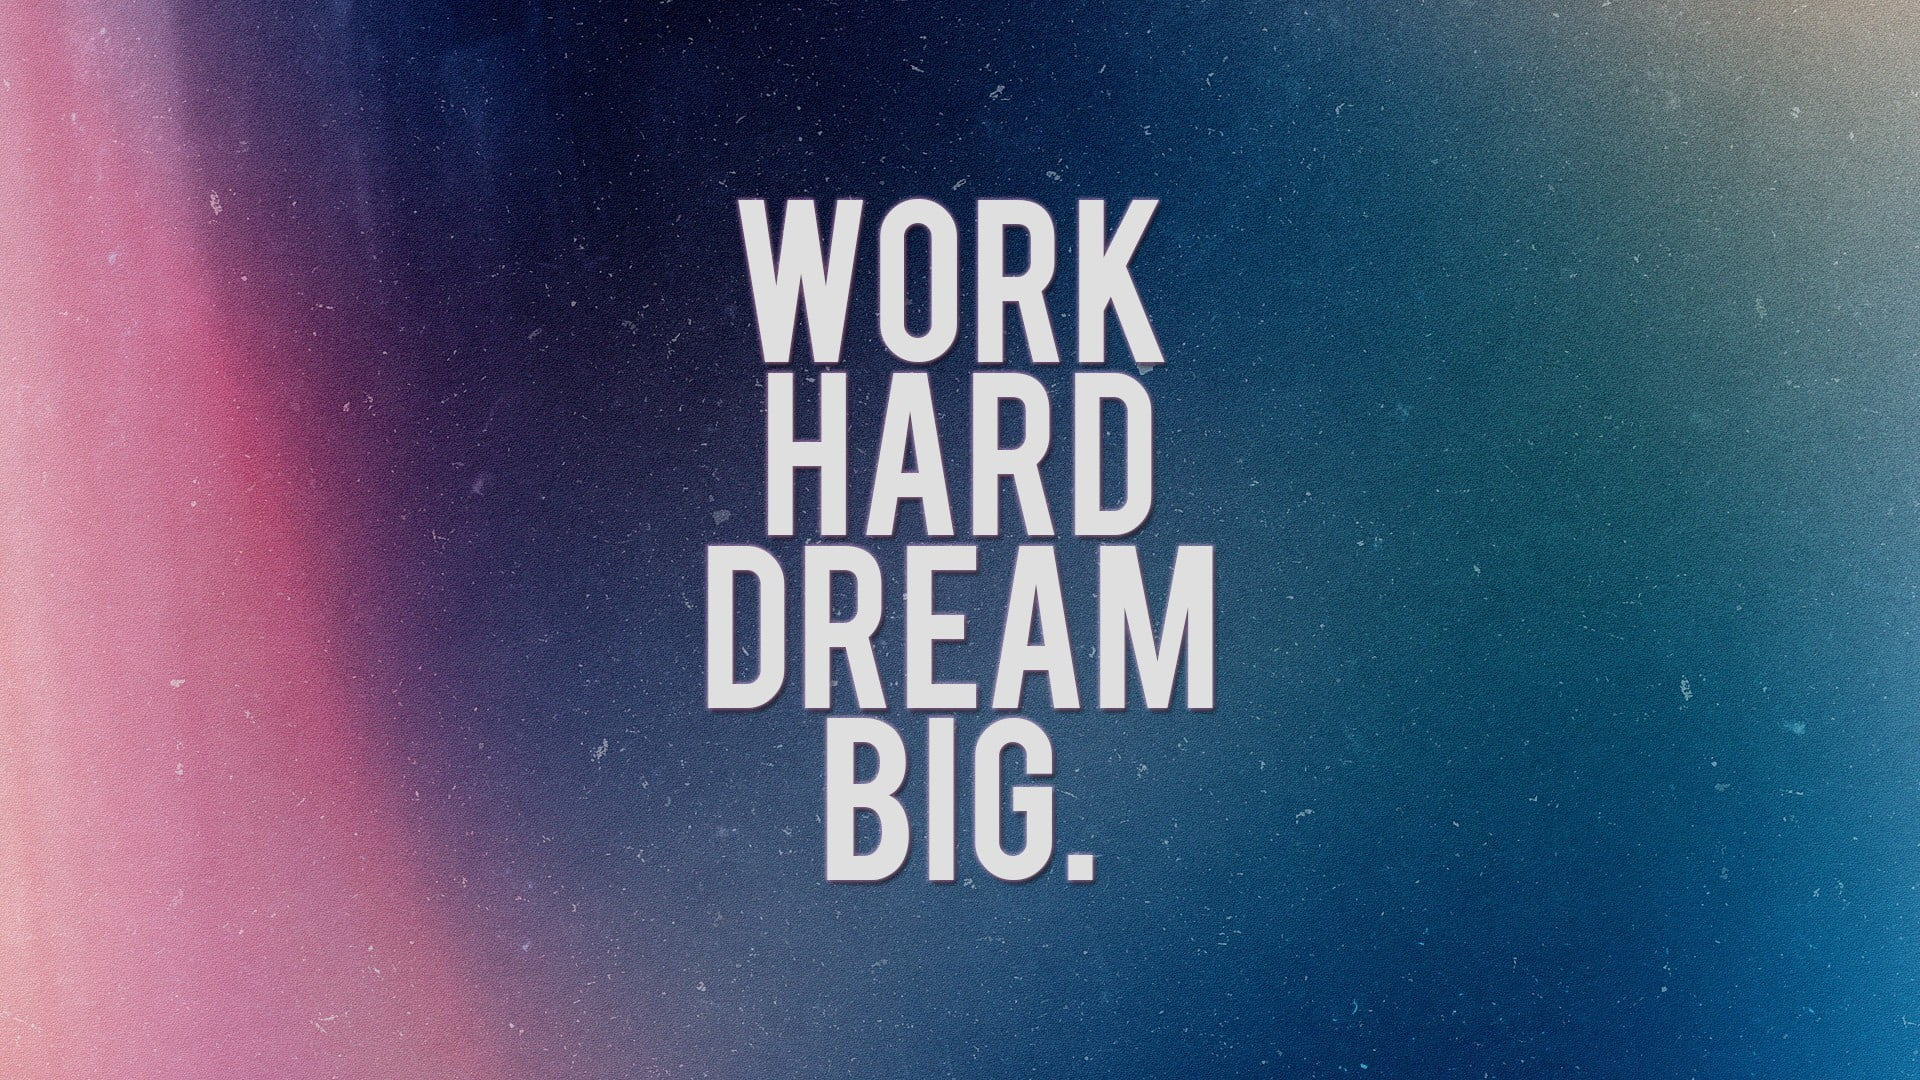 Work hard dream big wallpaper, quote, typography, inspirational, motivational